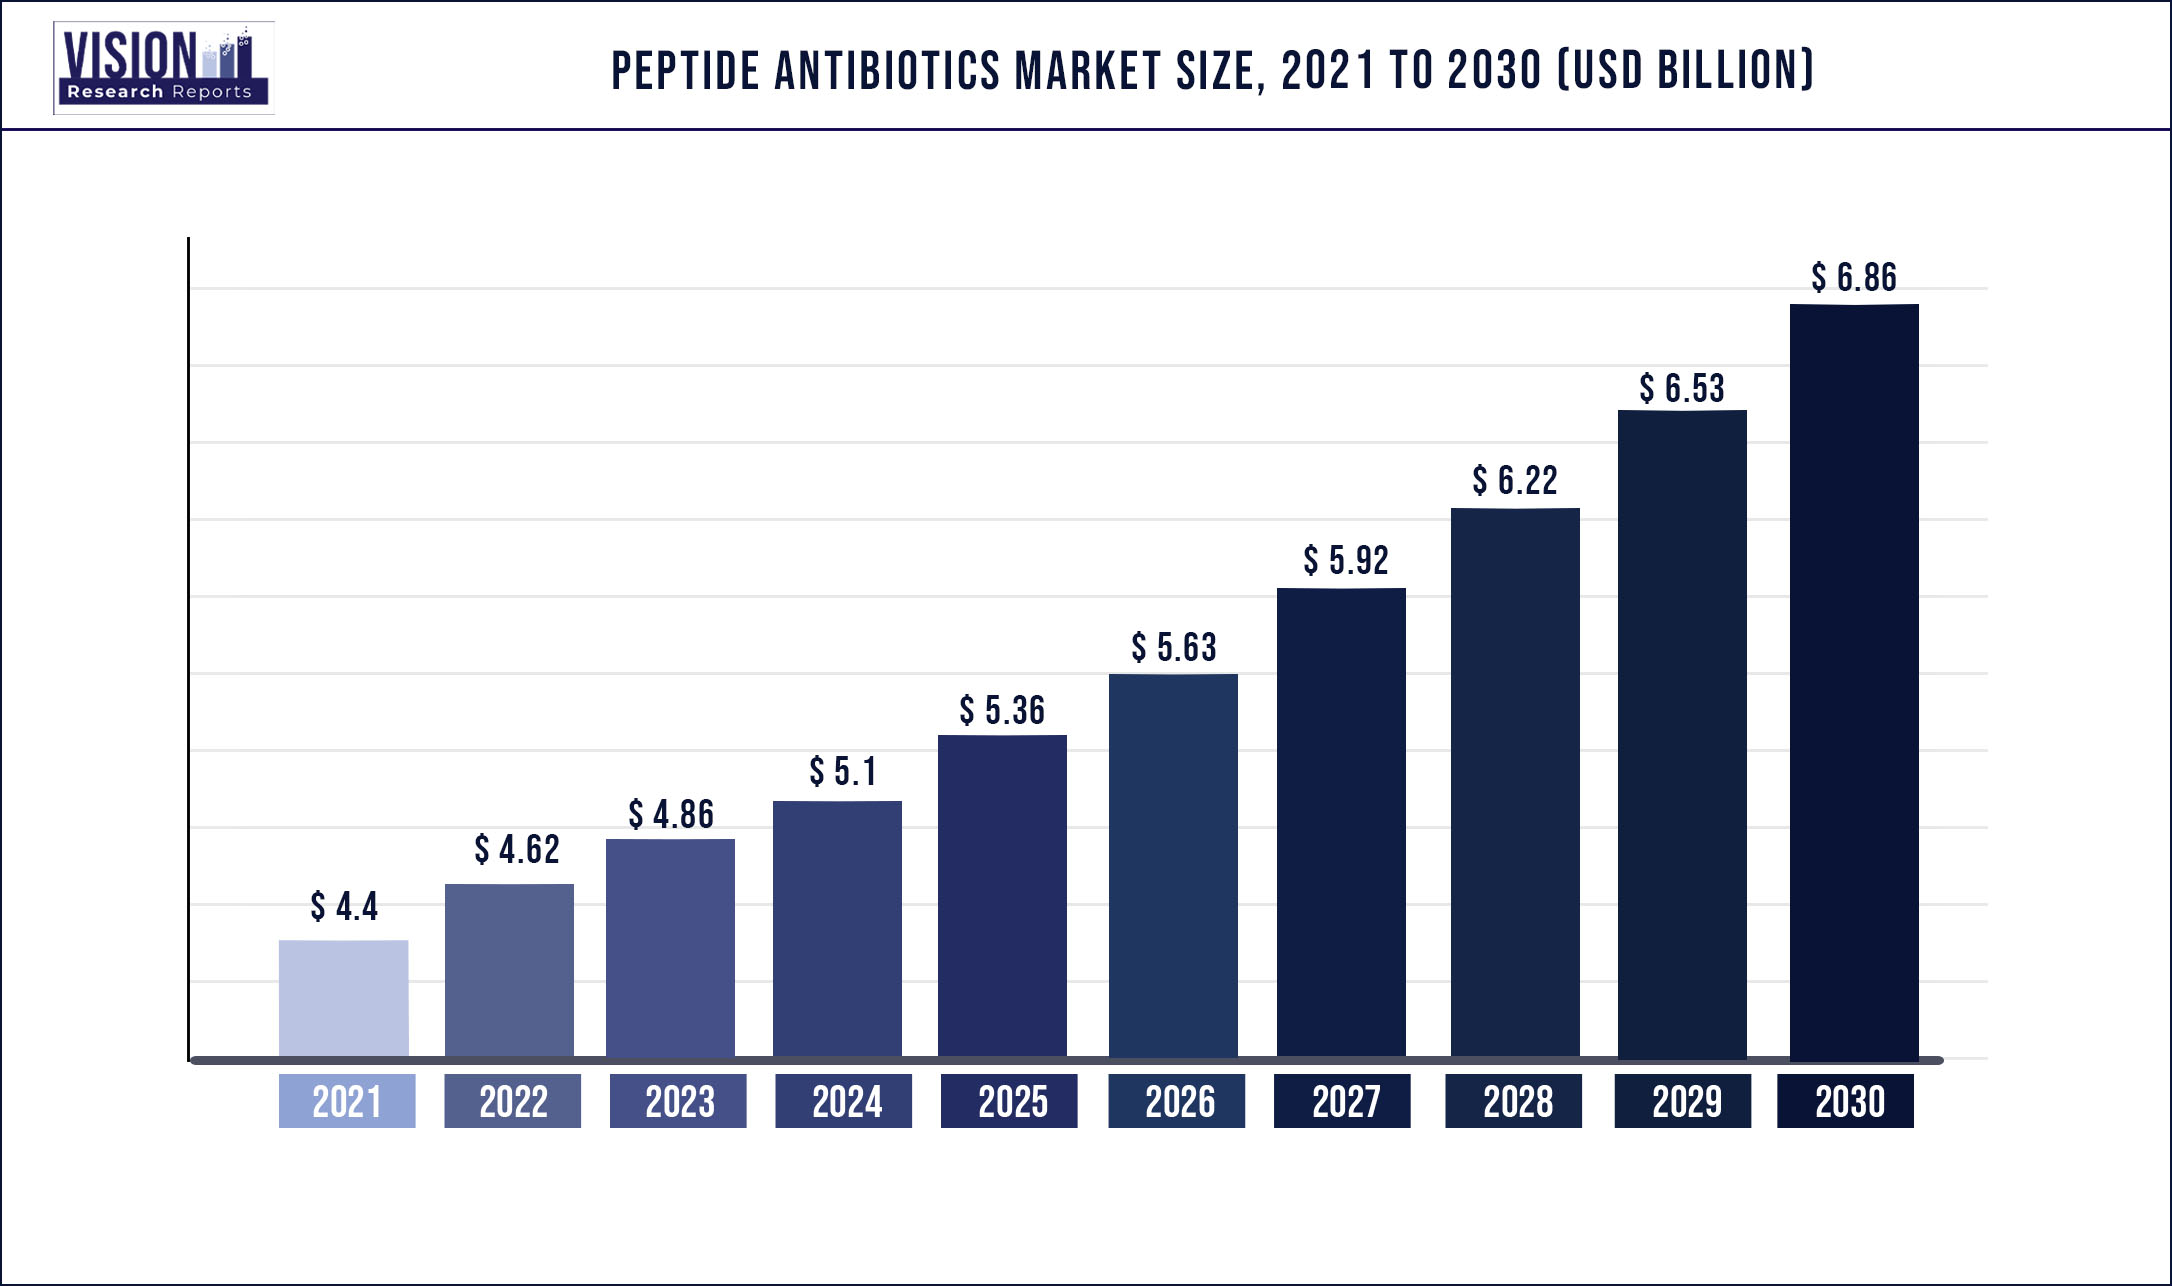 Peptide Antibiotics Market Size 2021 to 2030